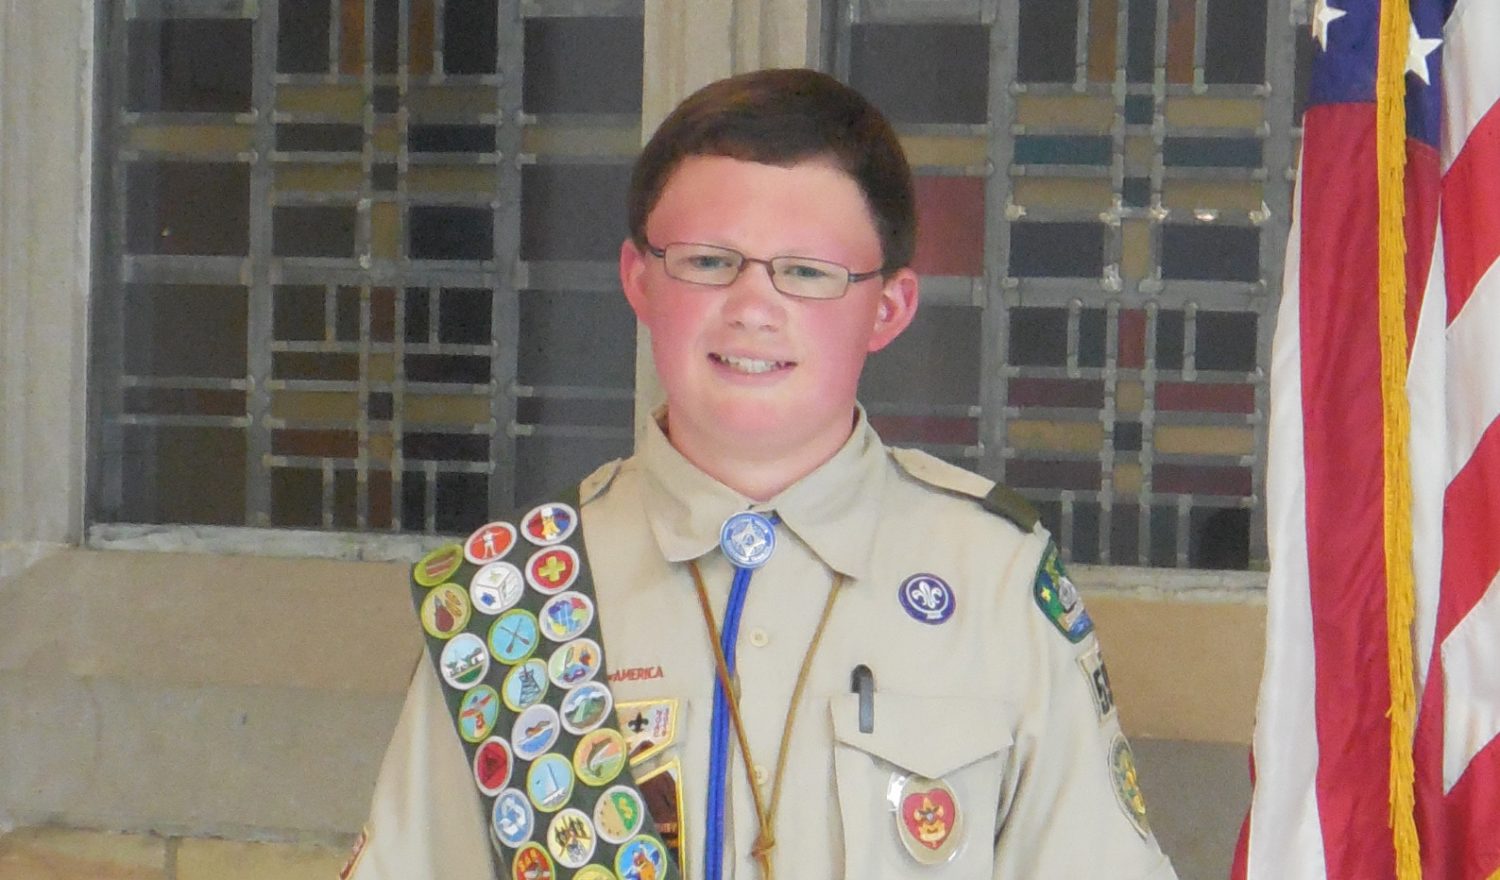 Schnabl earns Eagle Scout rank